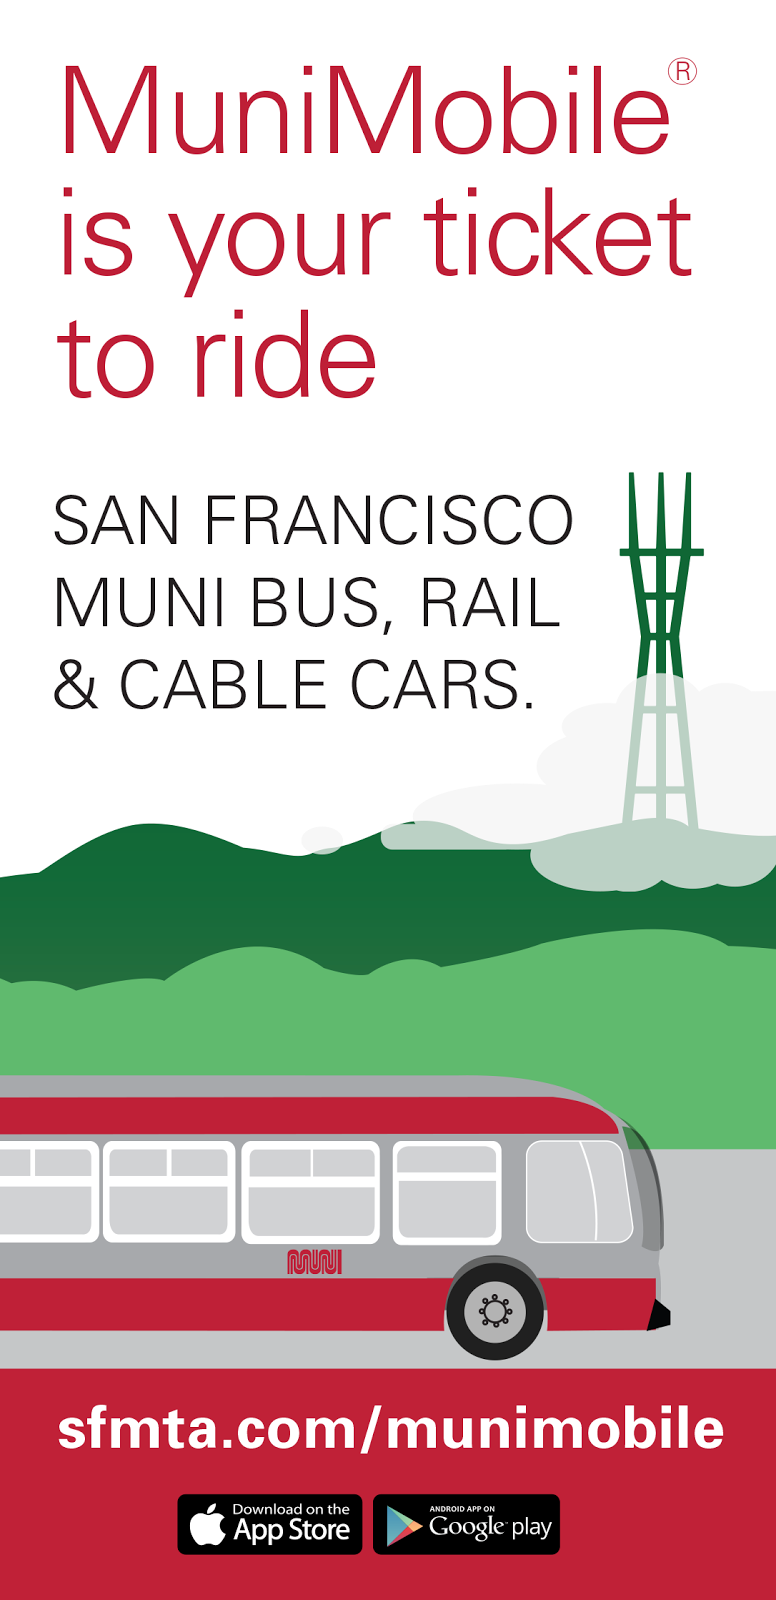 MuniMobile is your ticket to ride San Francisco Muni Bus, Rail & Cable Cars. sfmta.com/munimobile